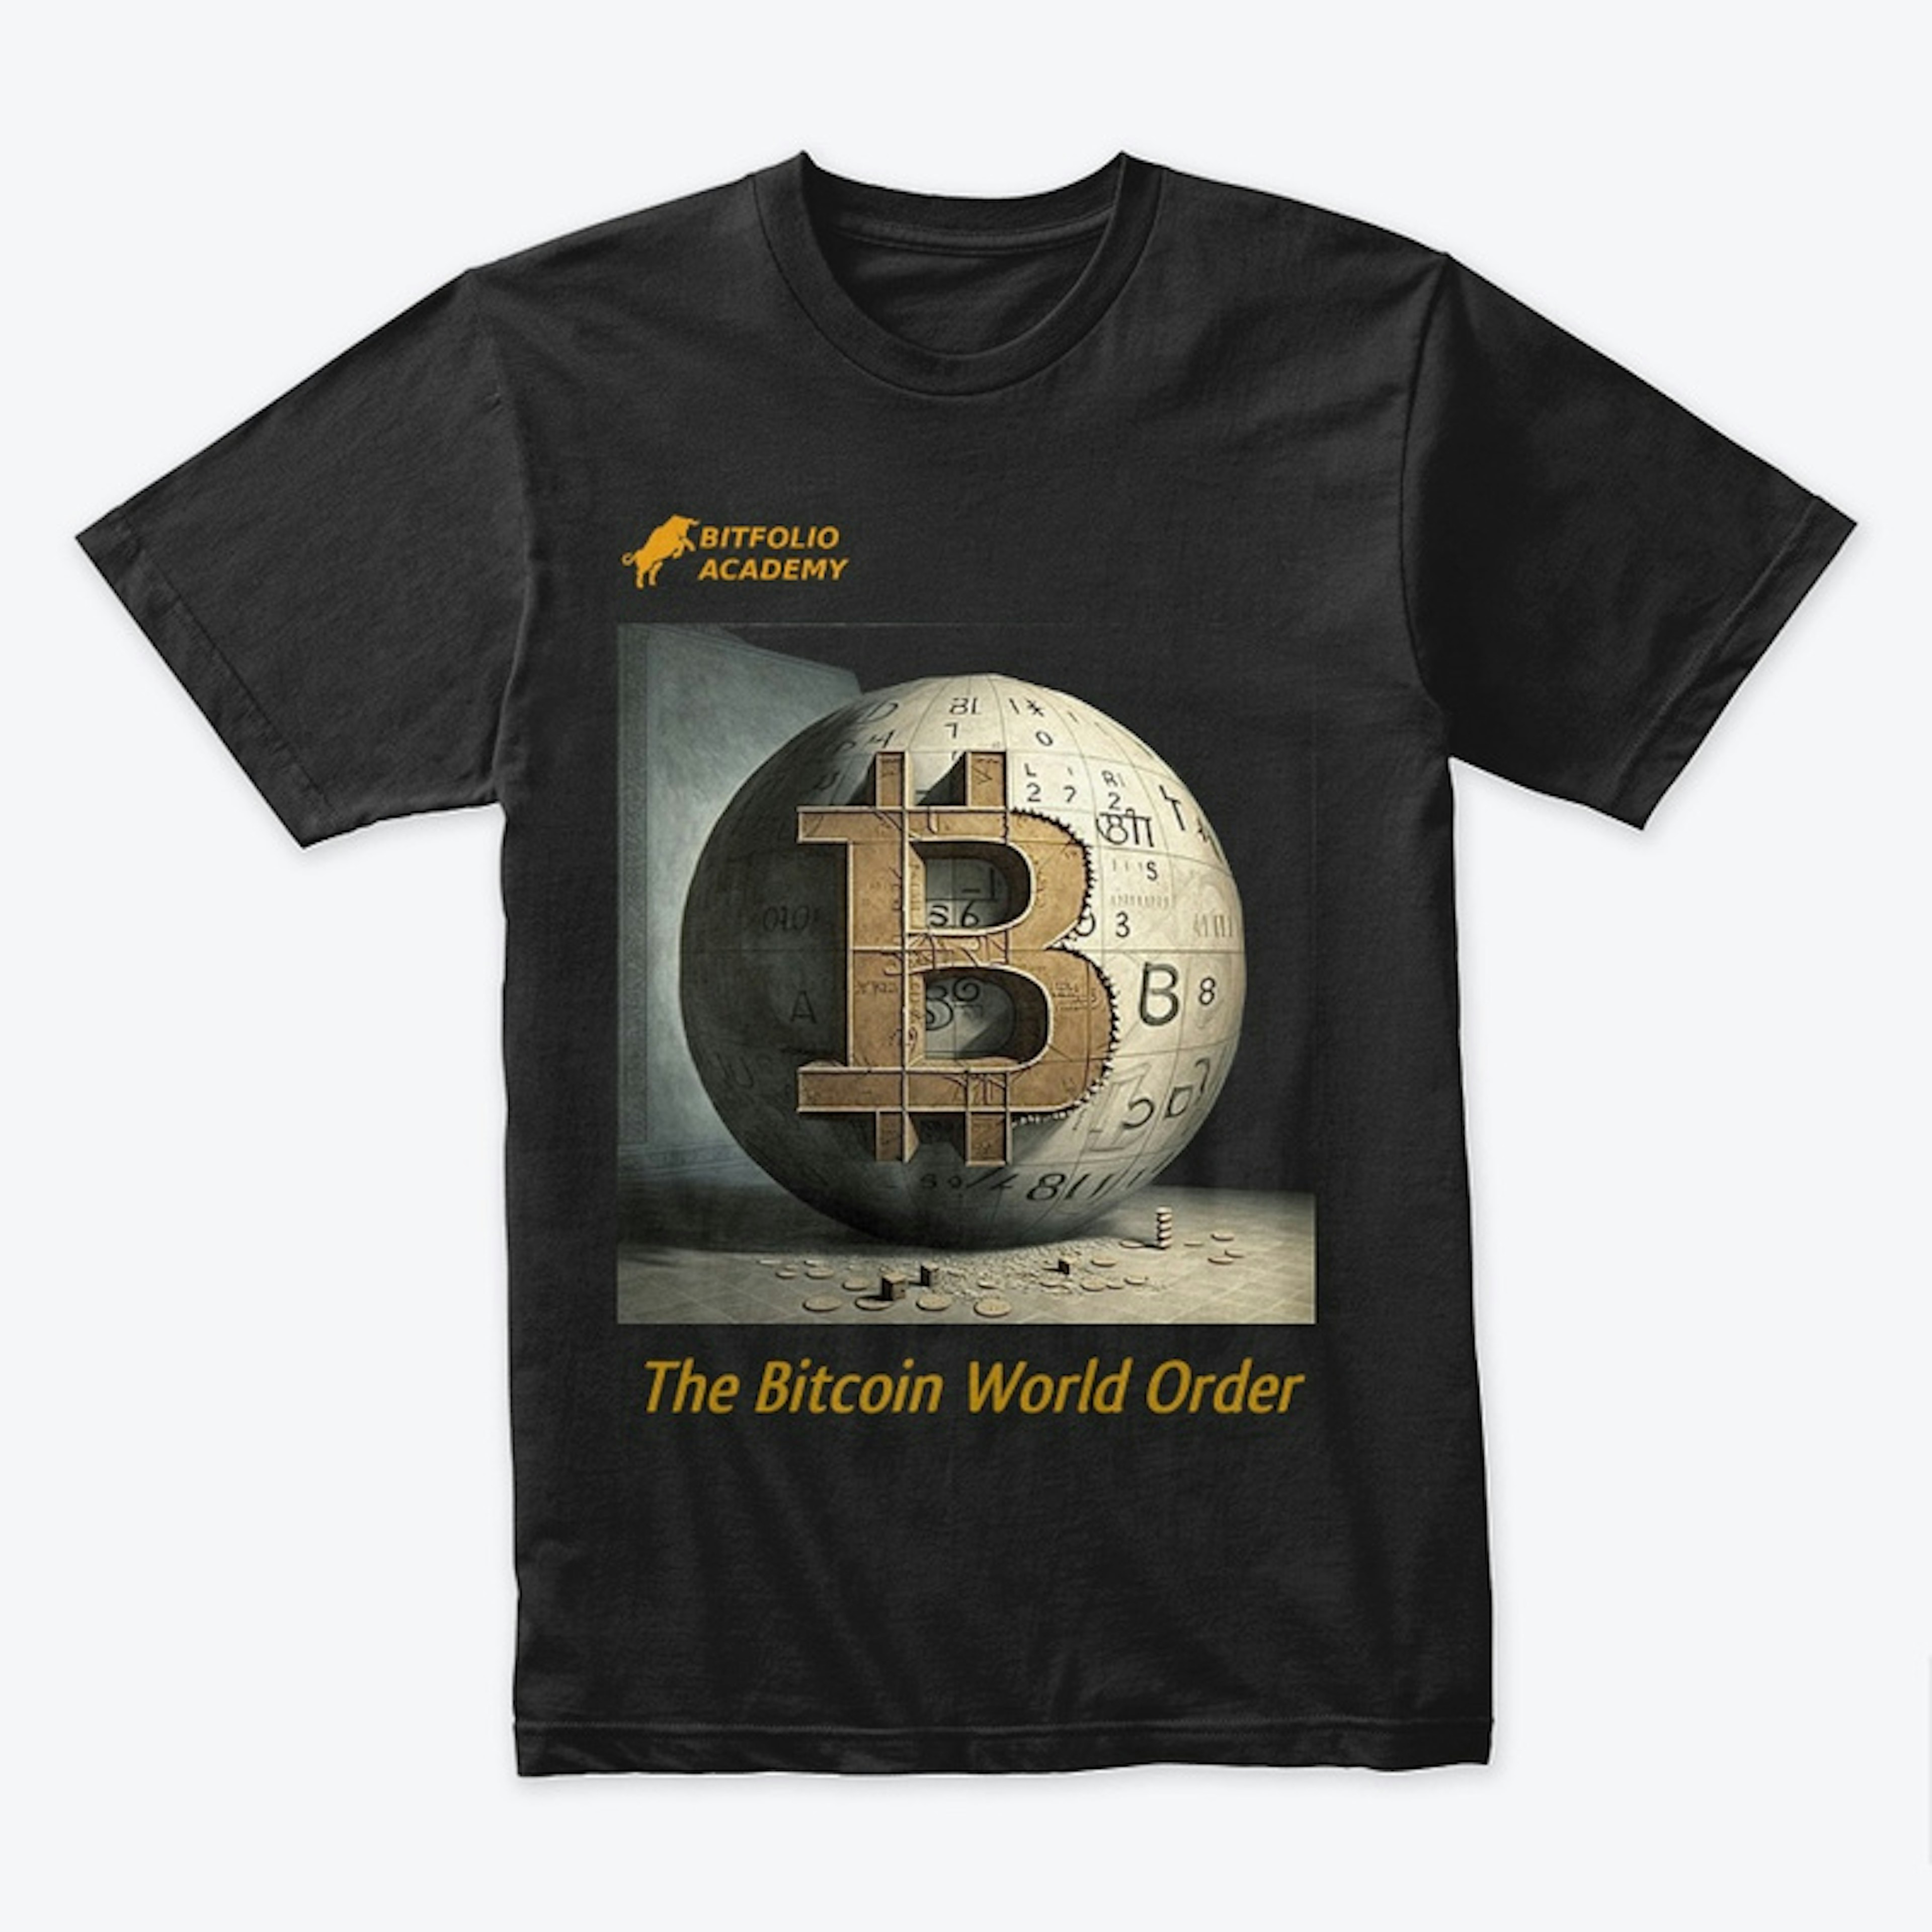 Join the Bitcoin World Order